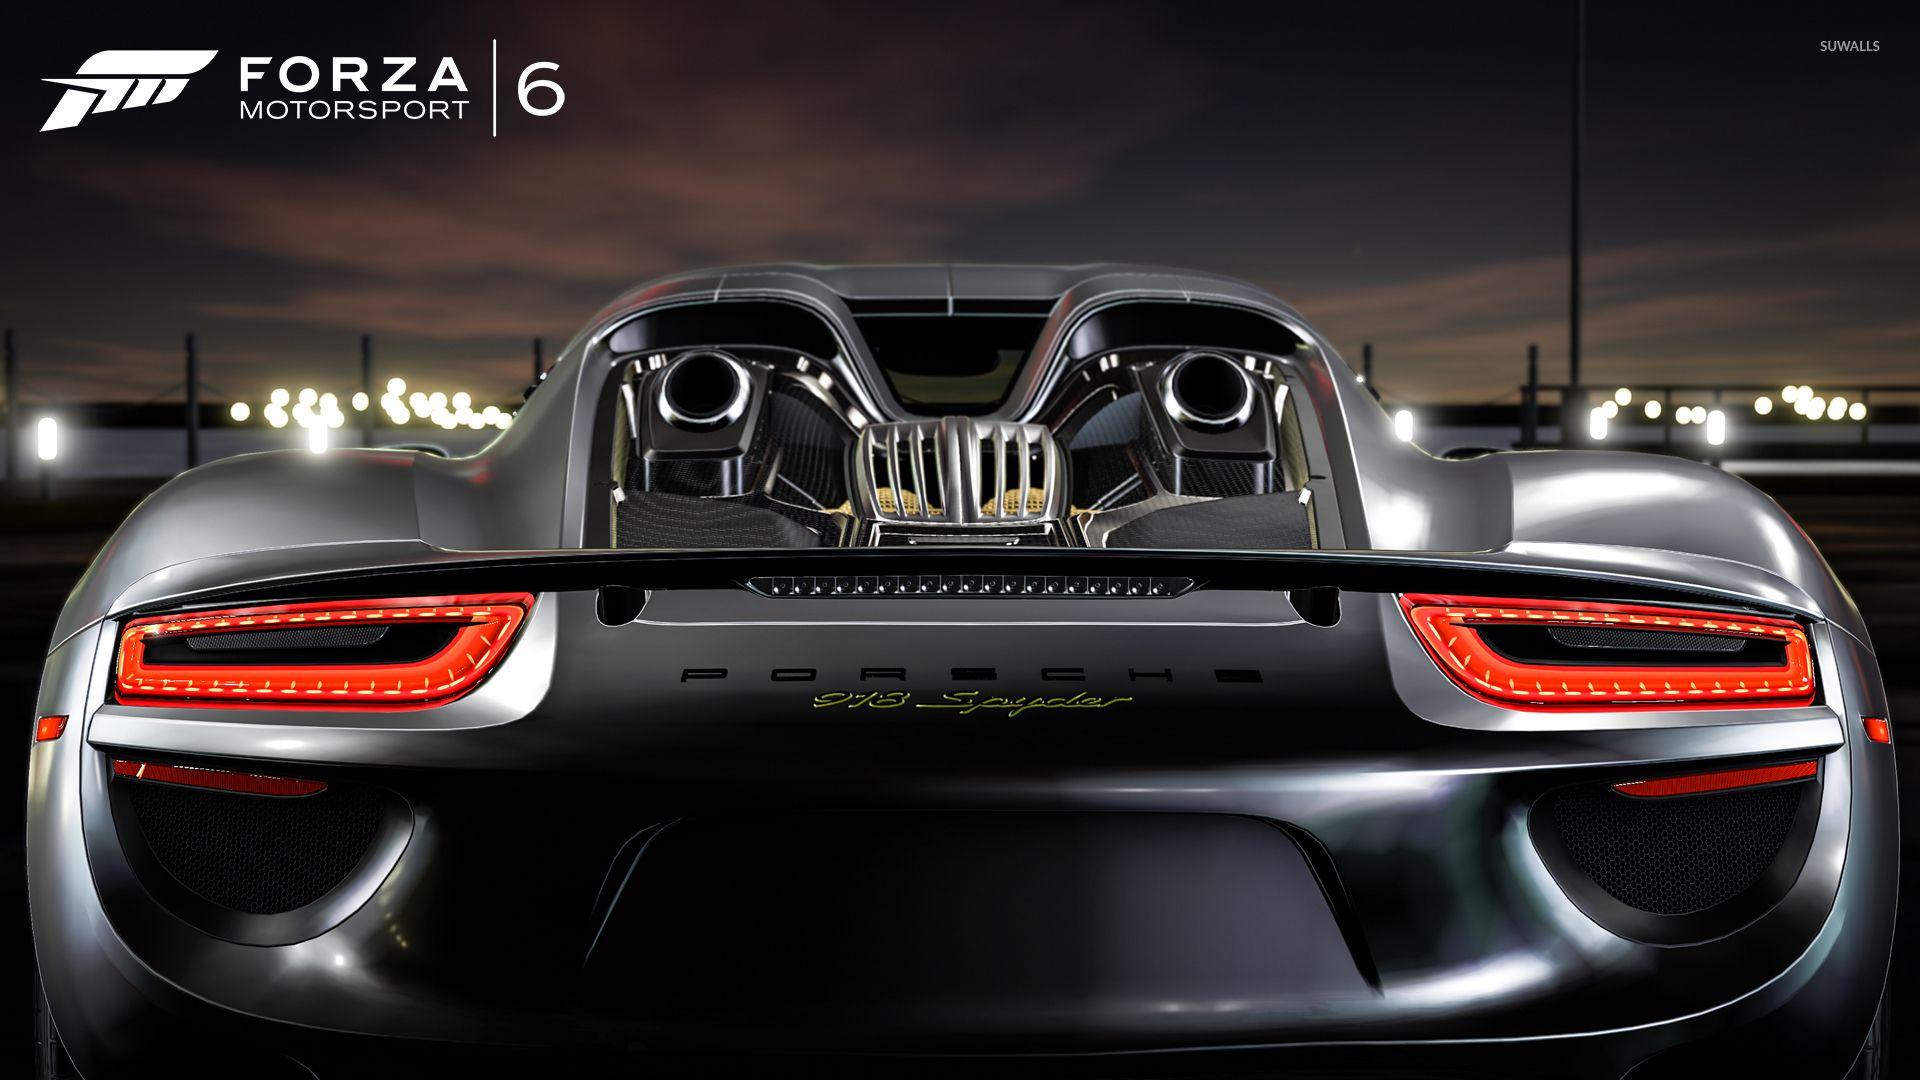 Back view of a Porsche 918 Spyder in Forza Motorsport 6 wallpaper